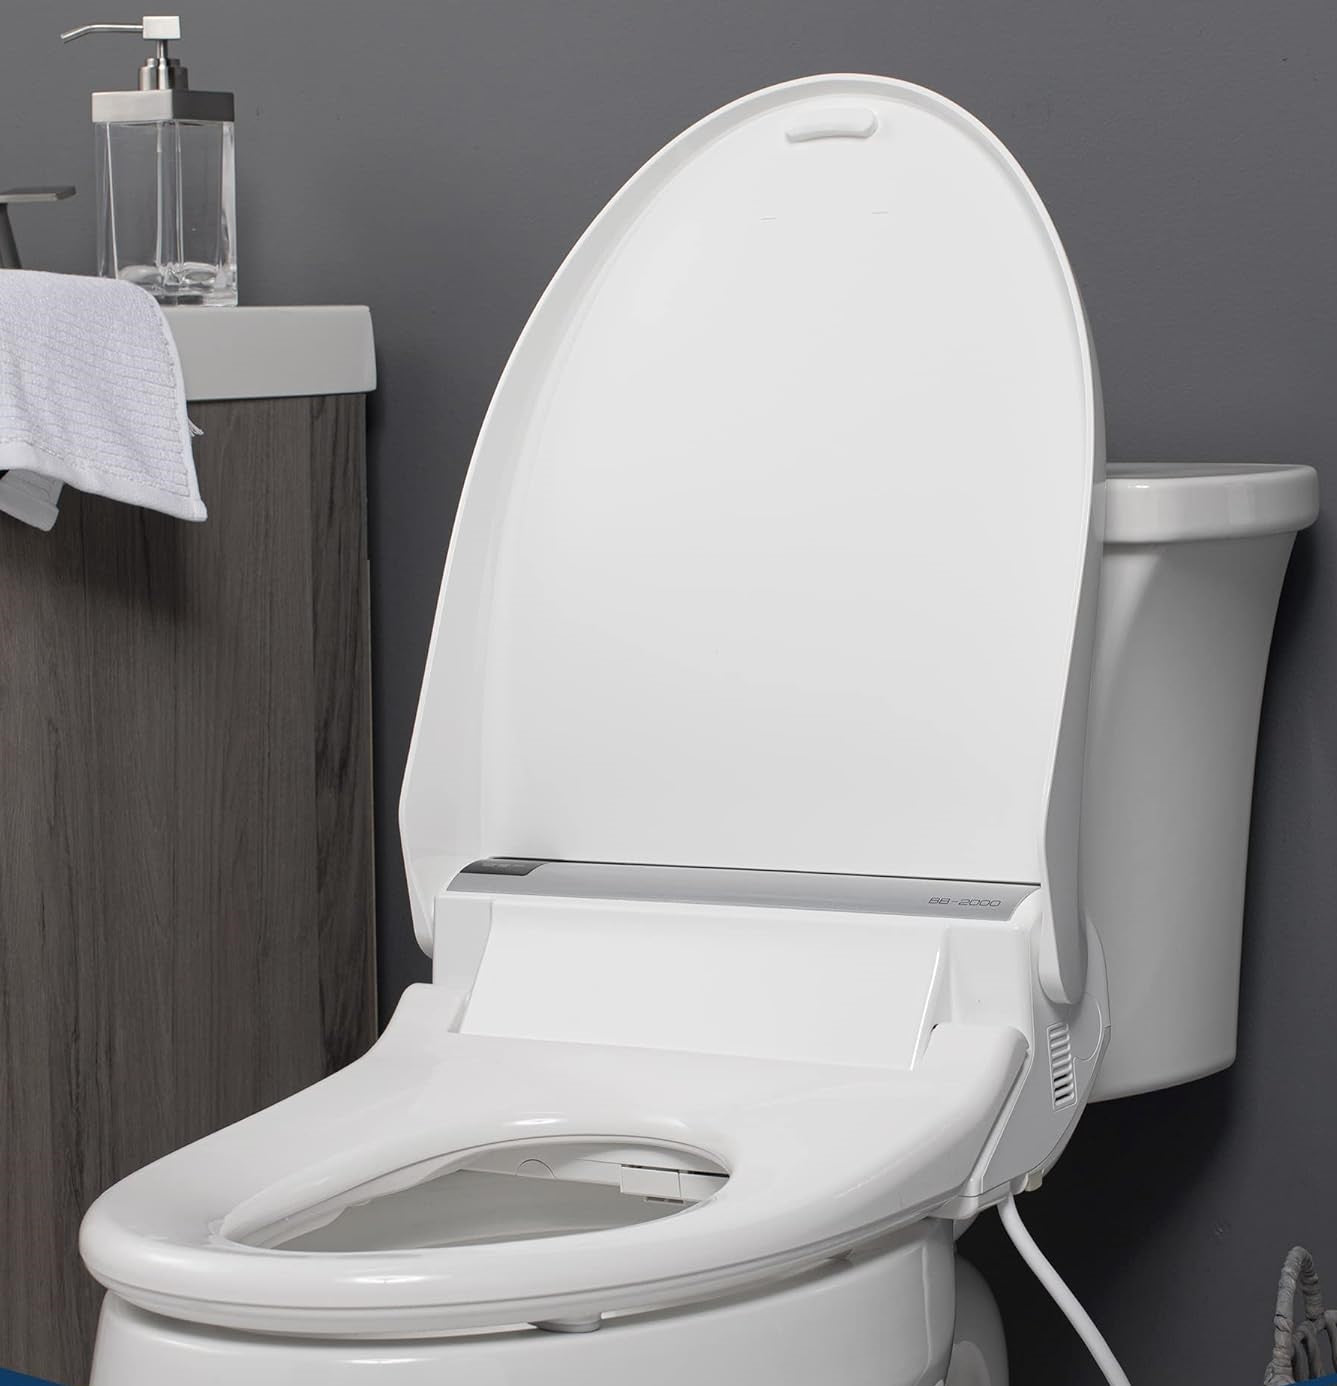 Toilet and Bidet Seats